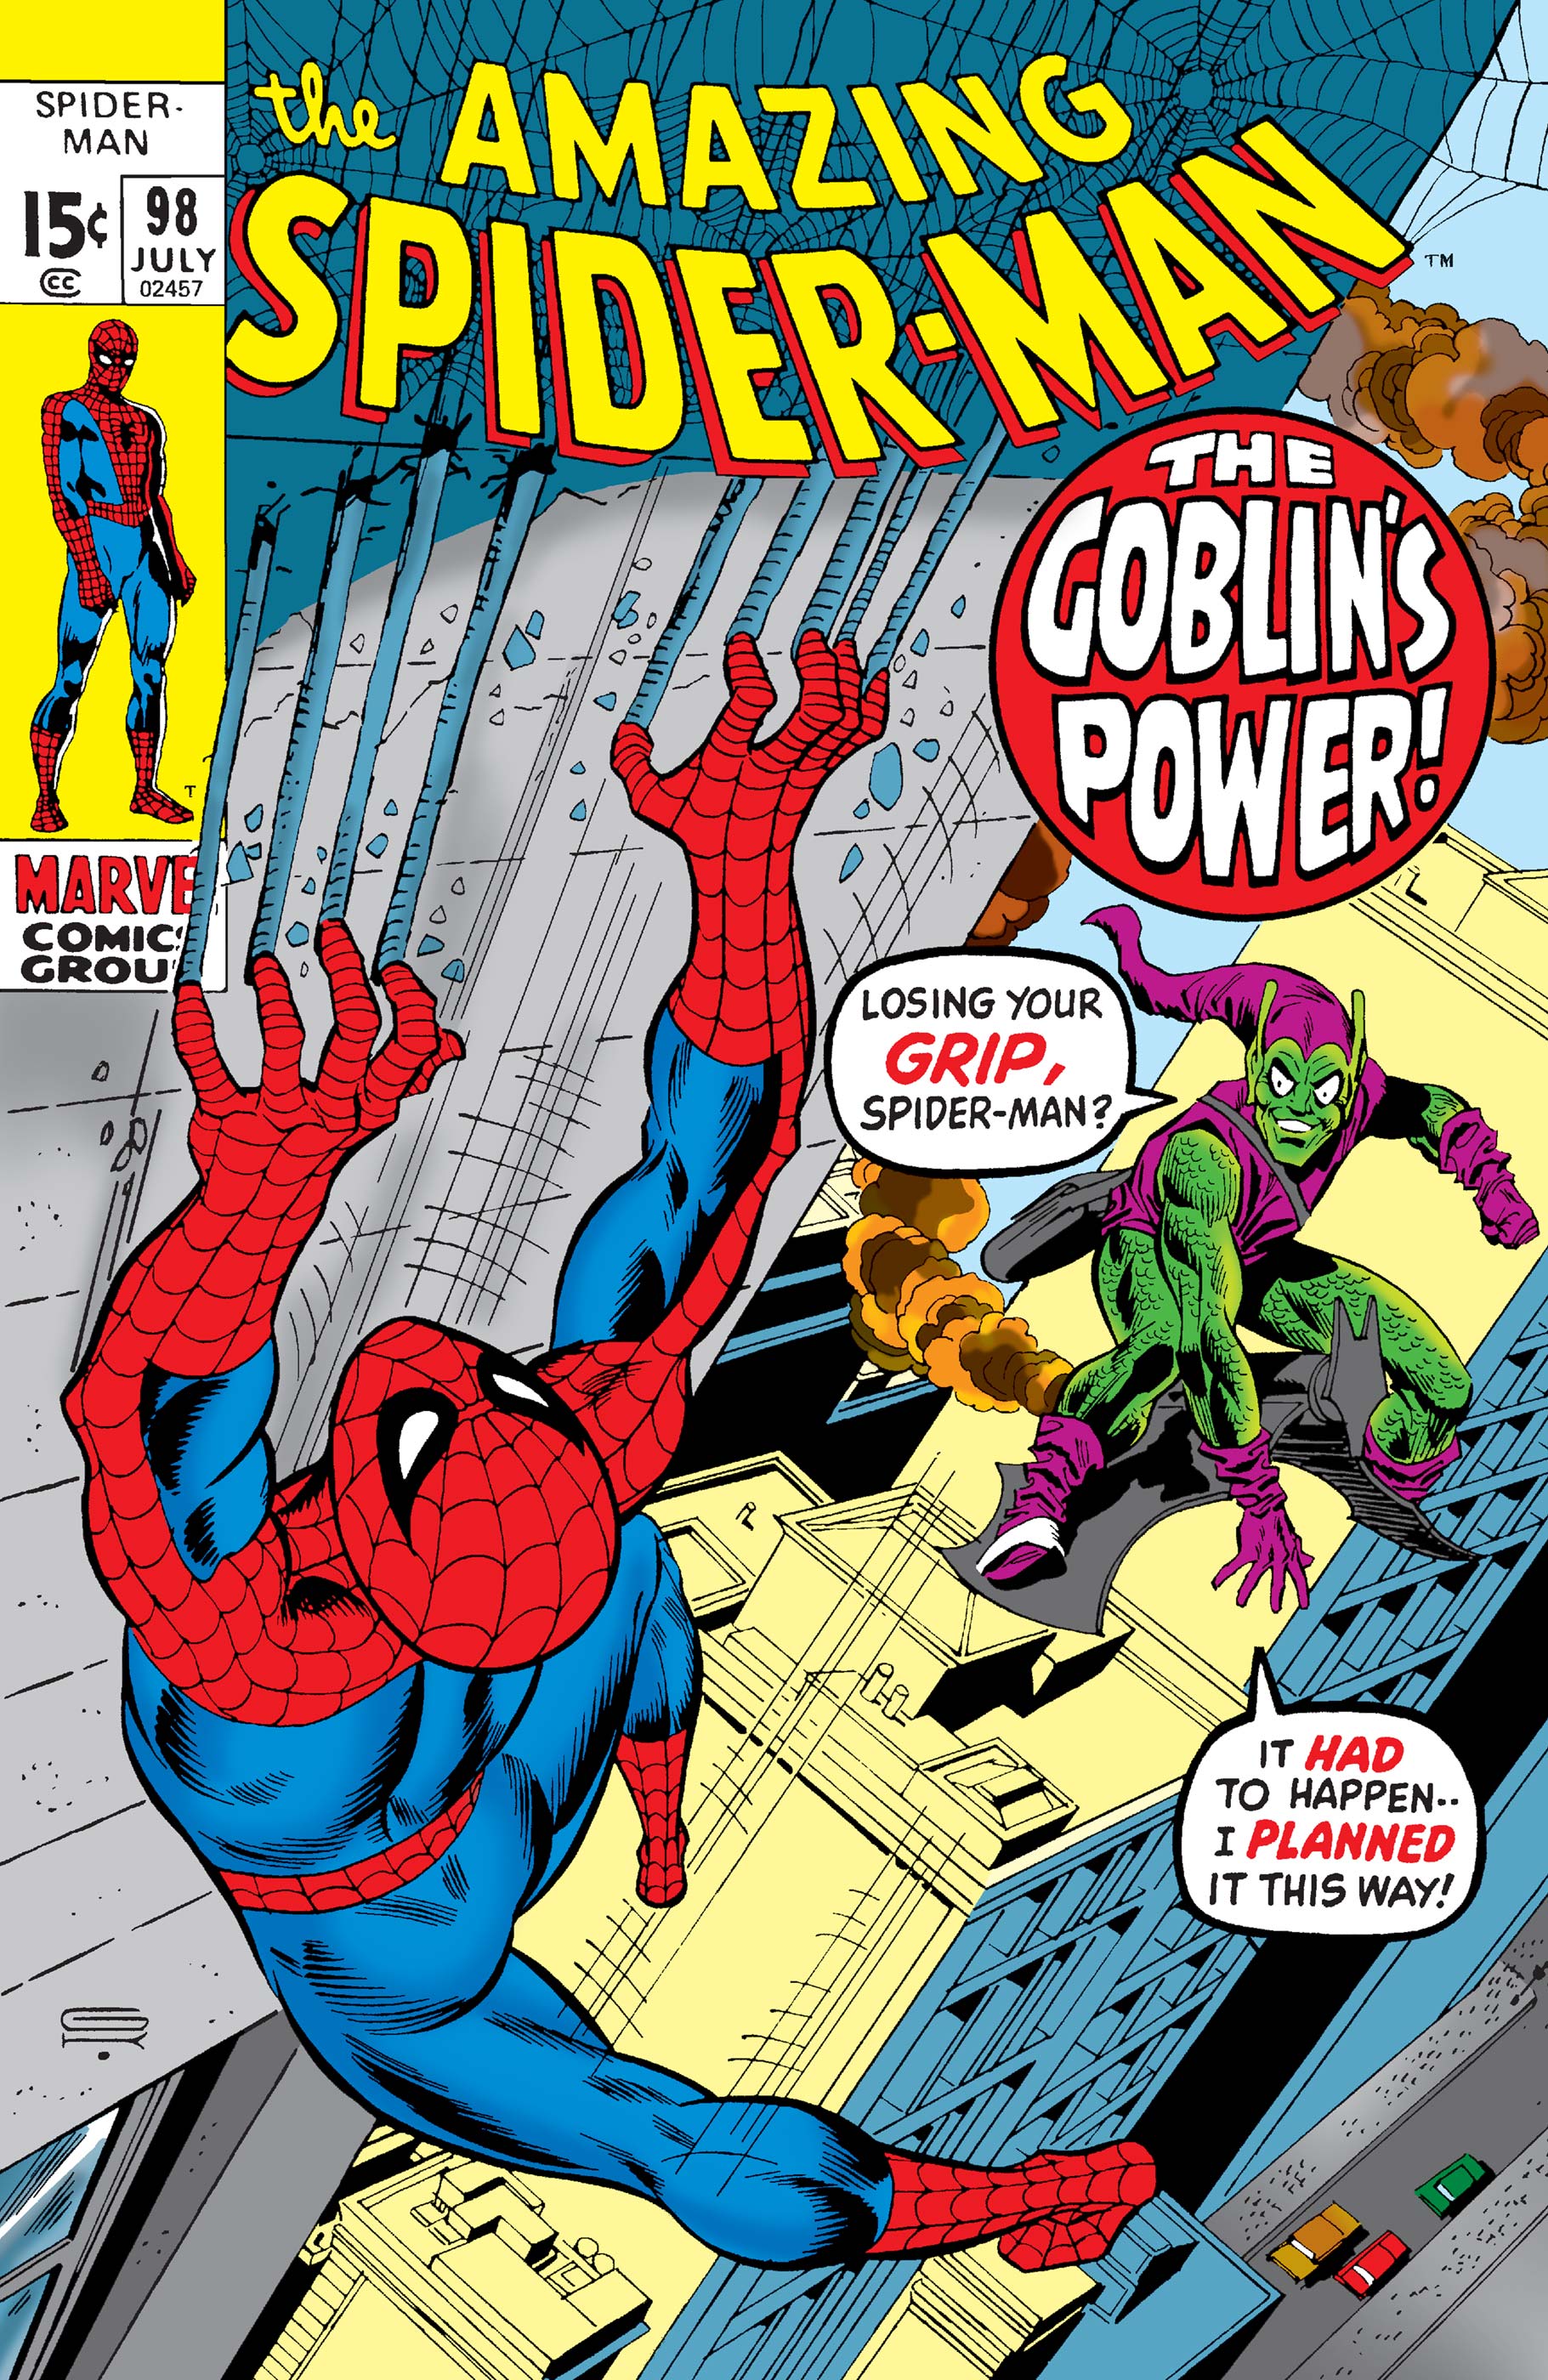 The Amazing Spider-Man (1963) #98